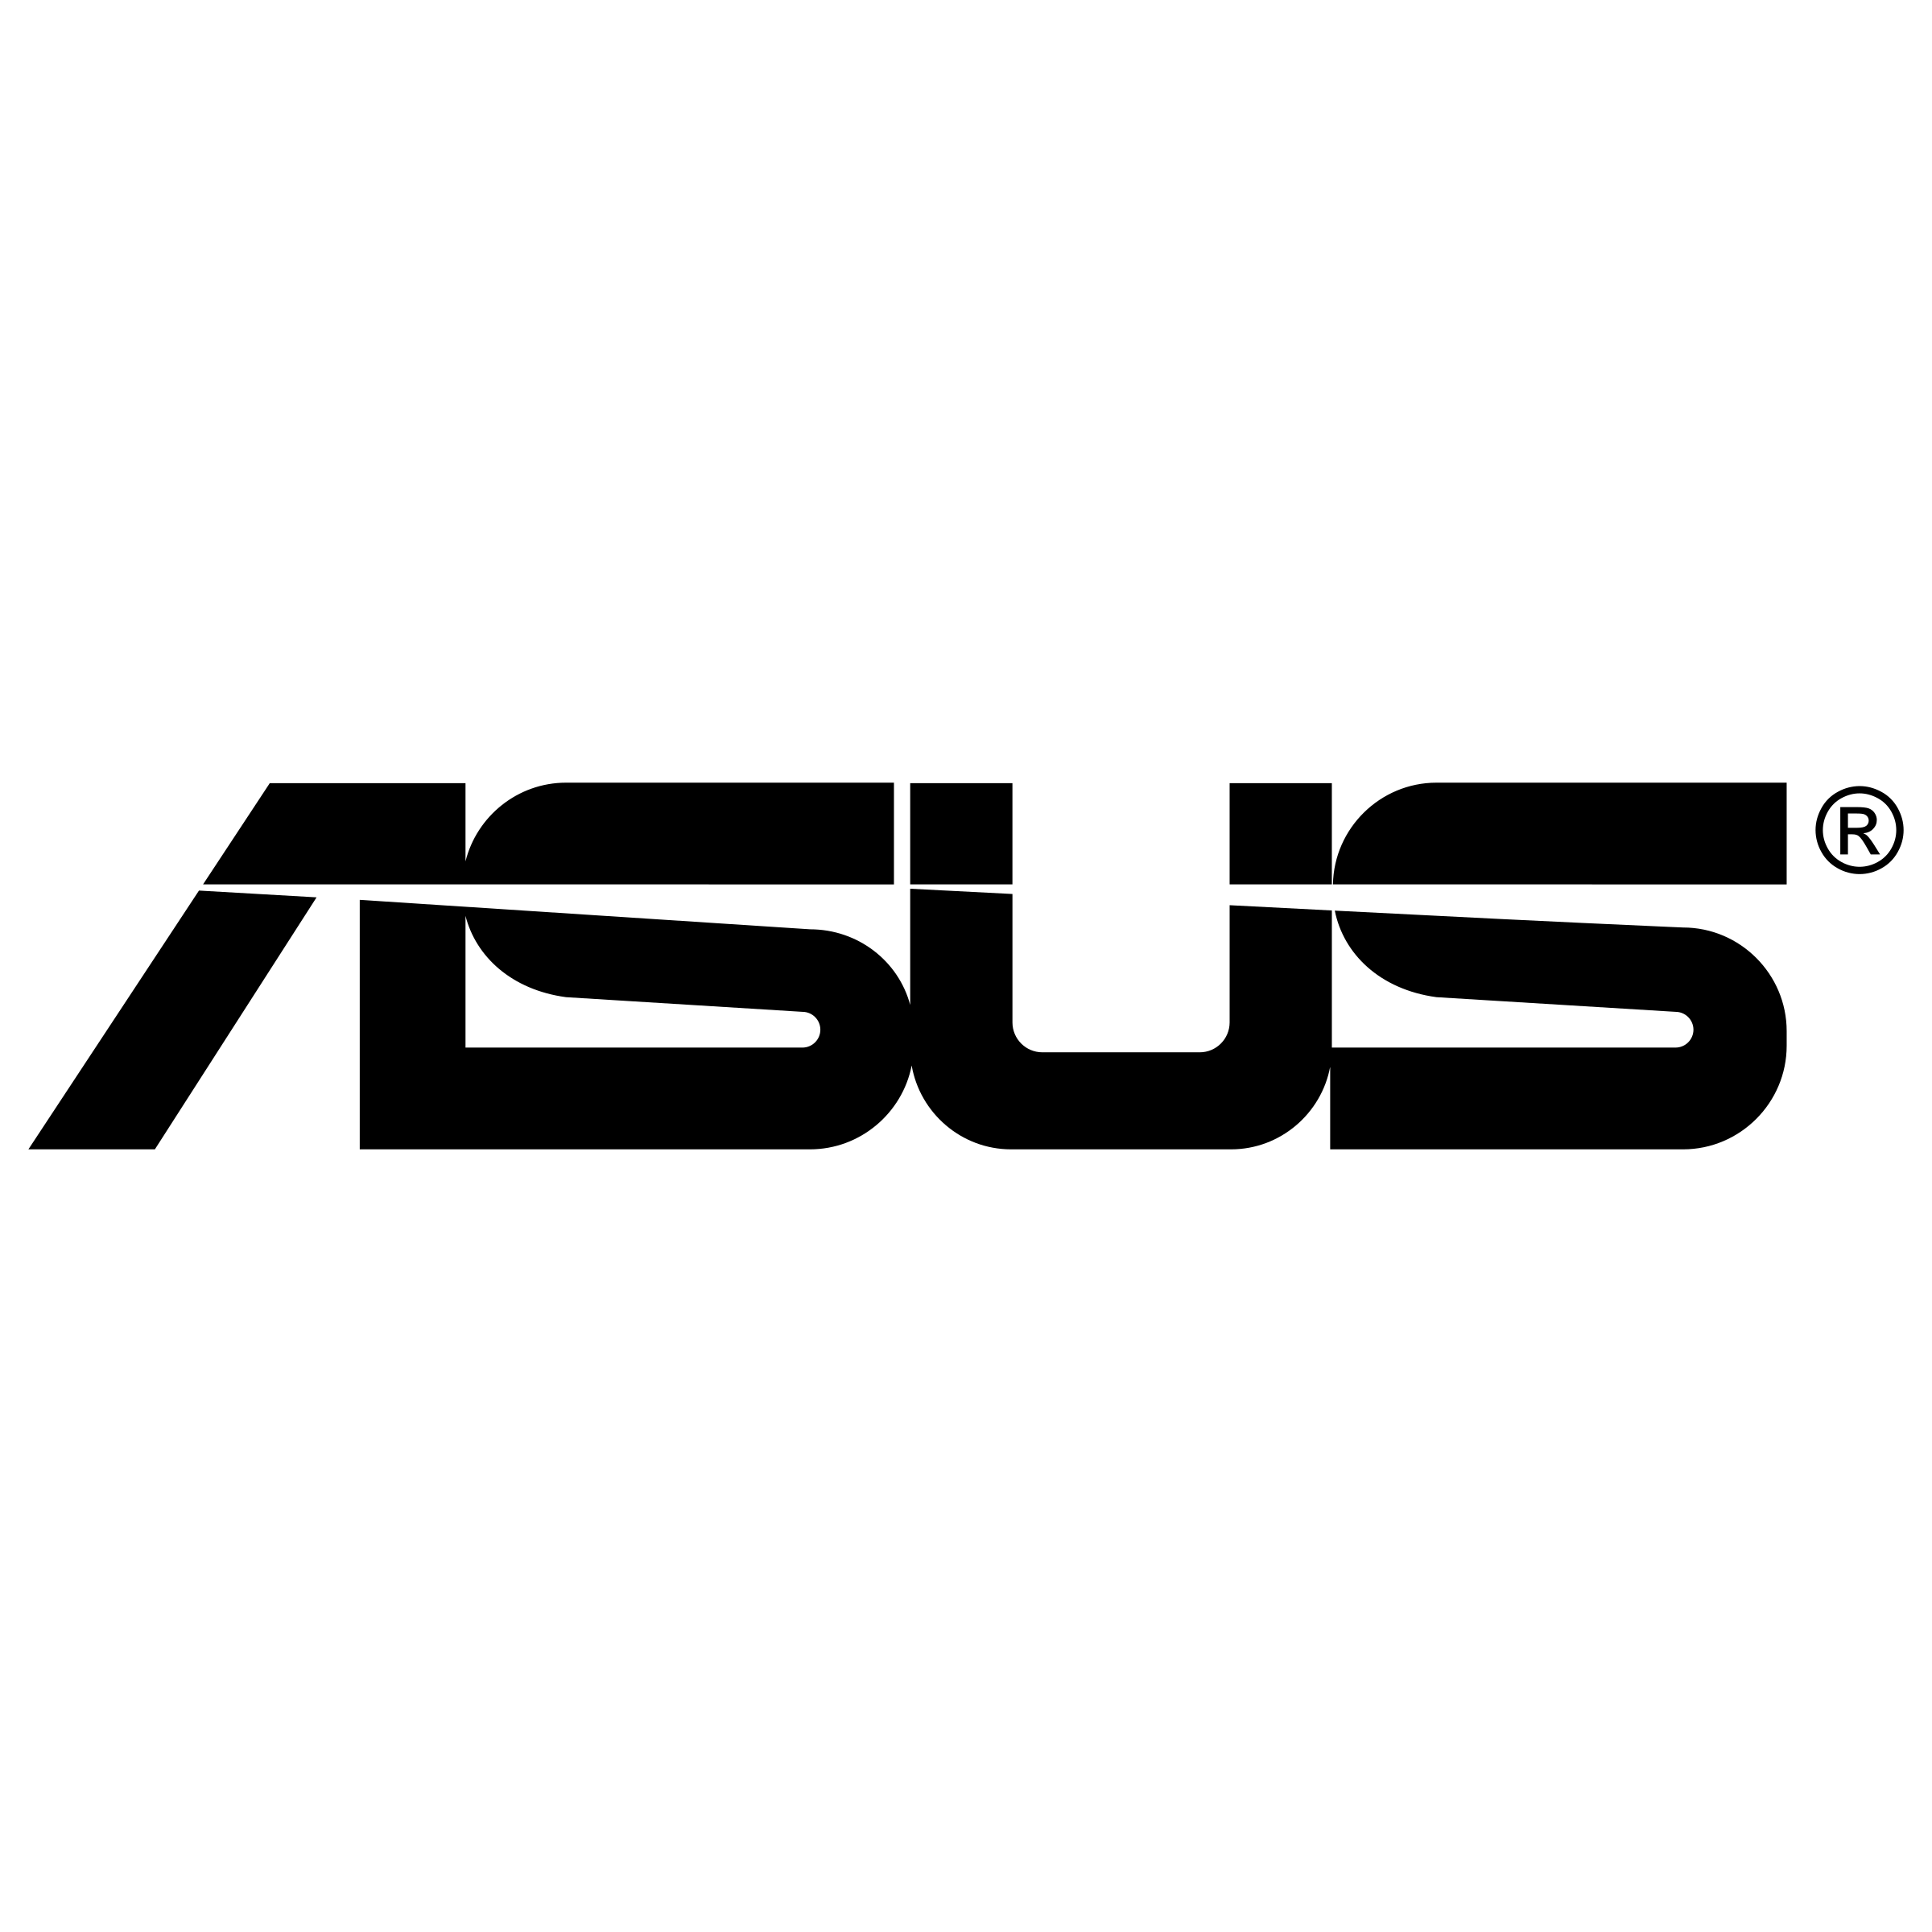 Asus Logo - Asus Logo PNG Transparent & SVG Vector - Freebie Supply